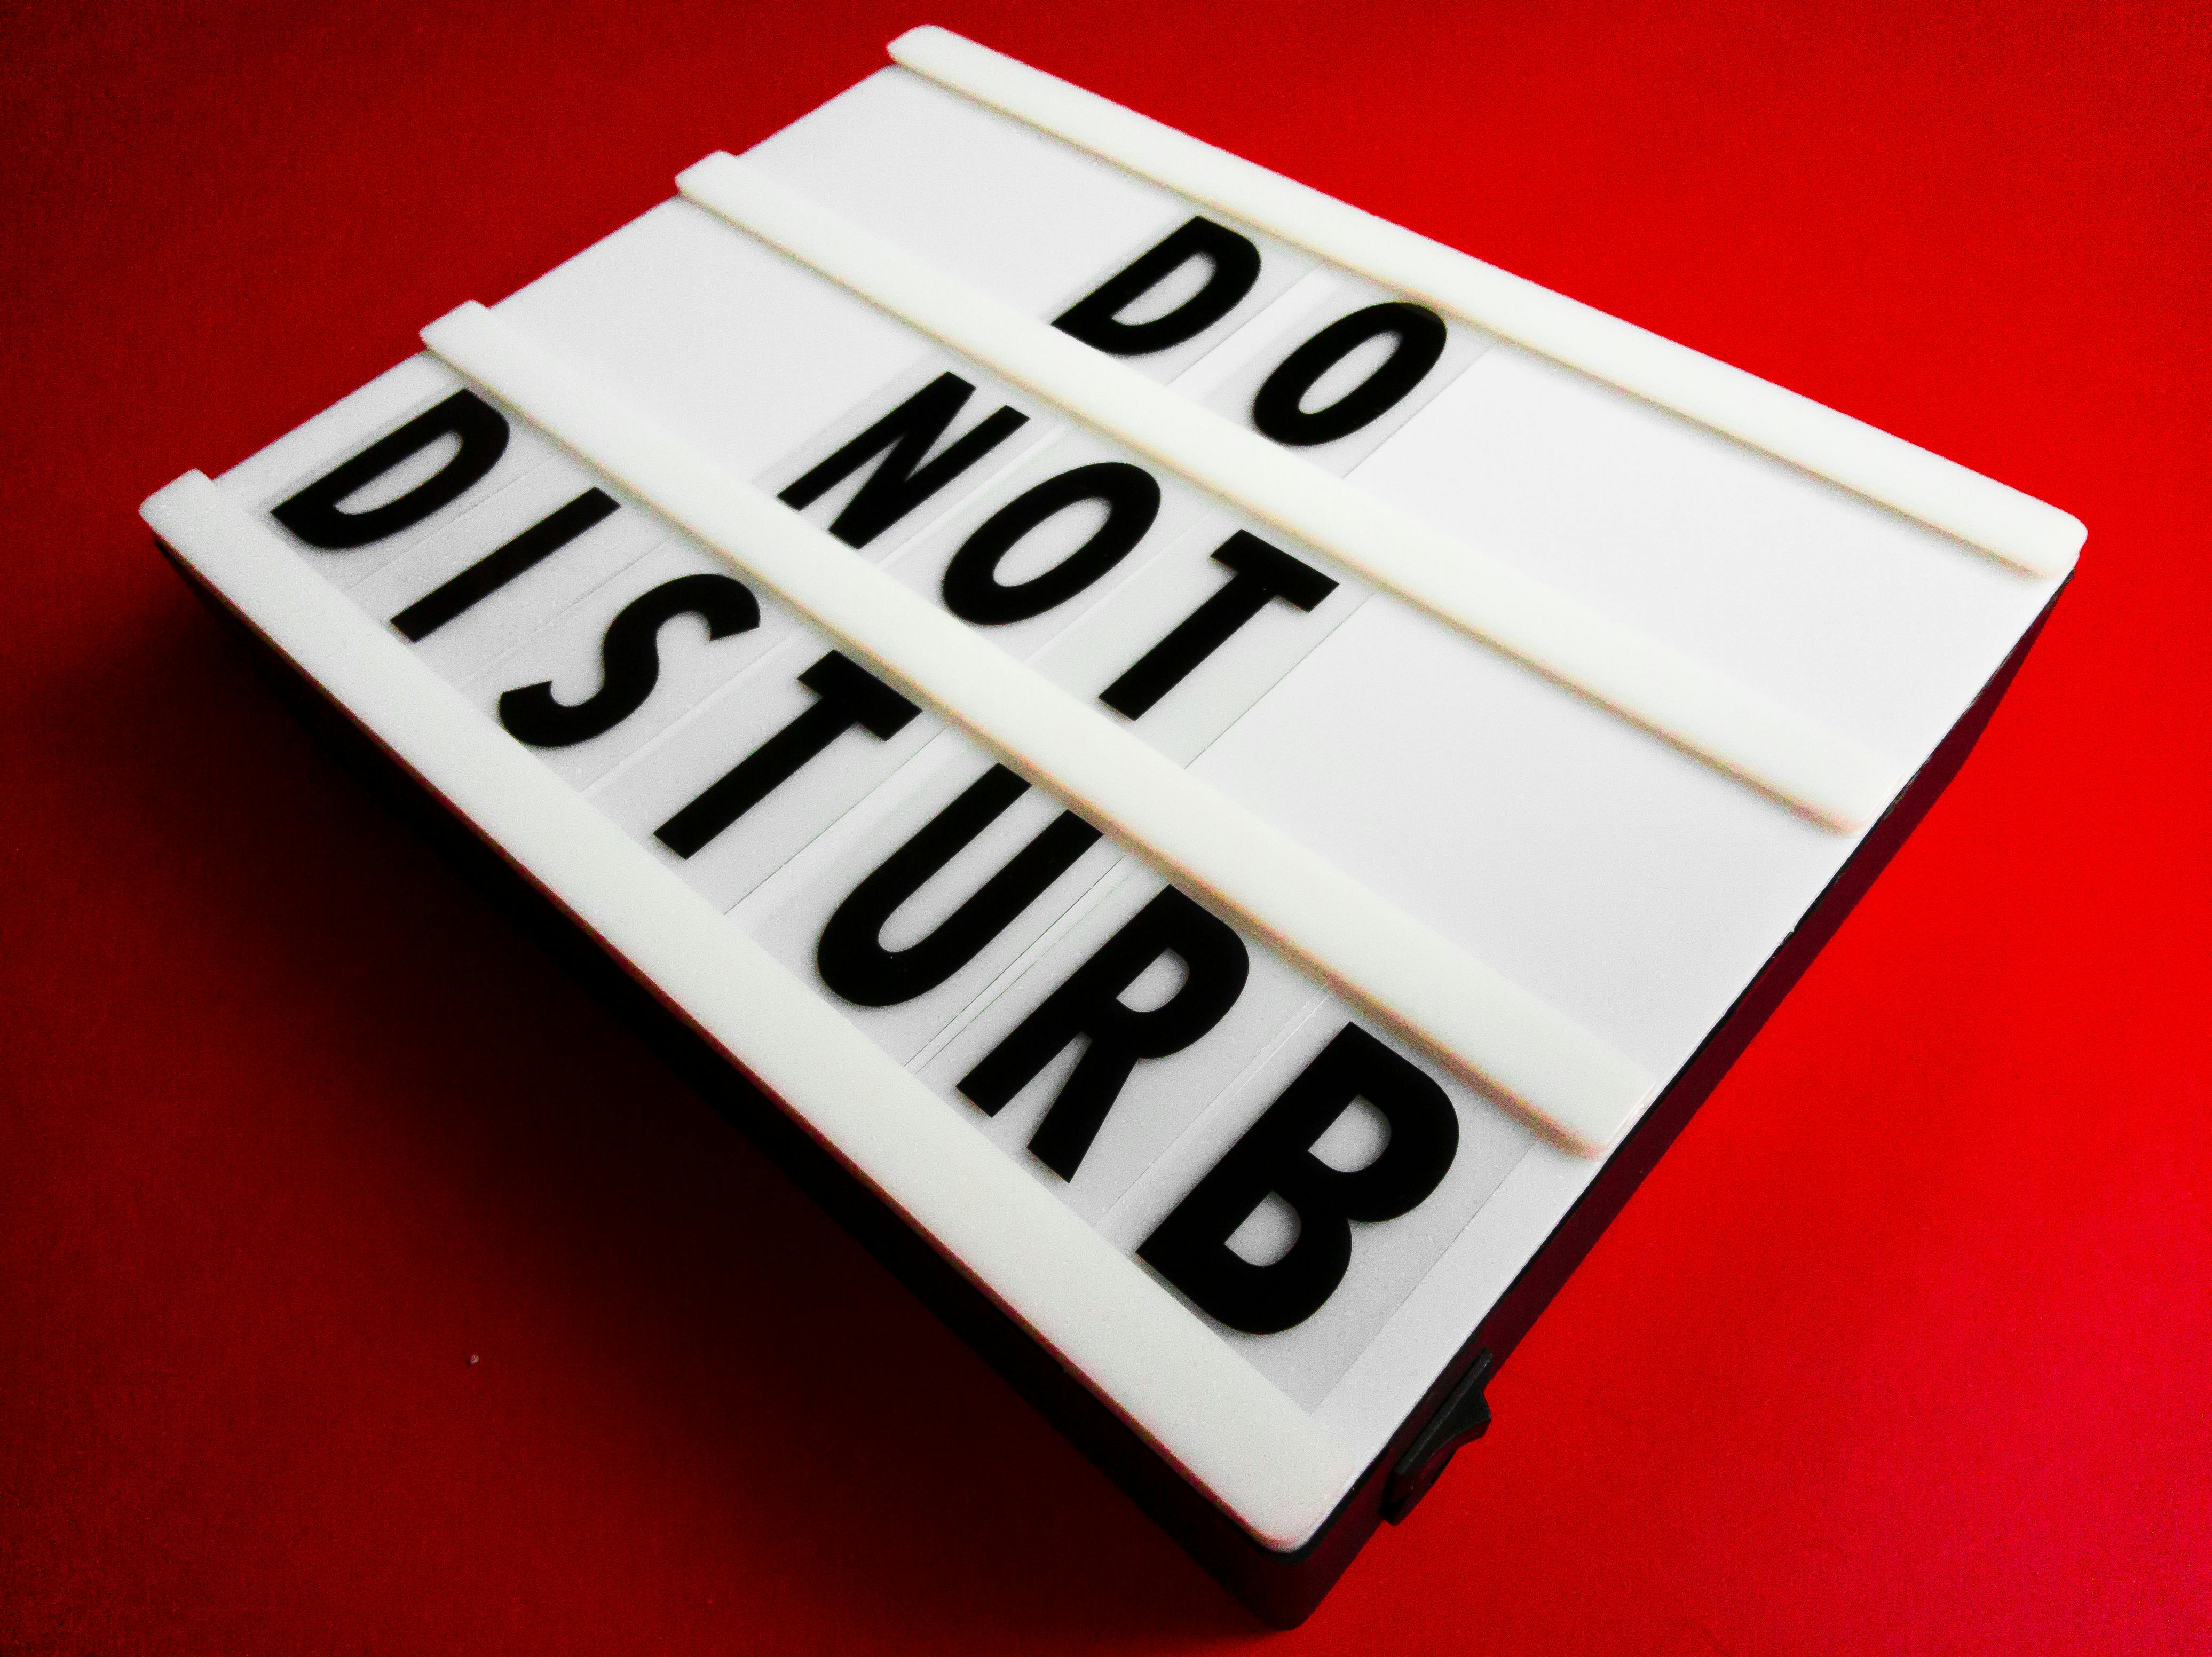 do not disturb images